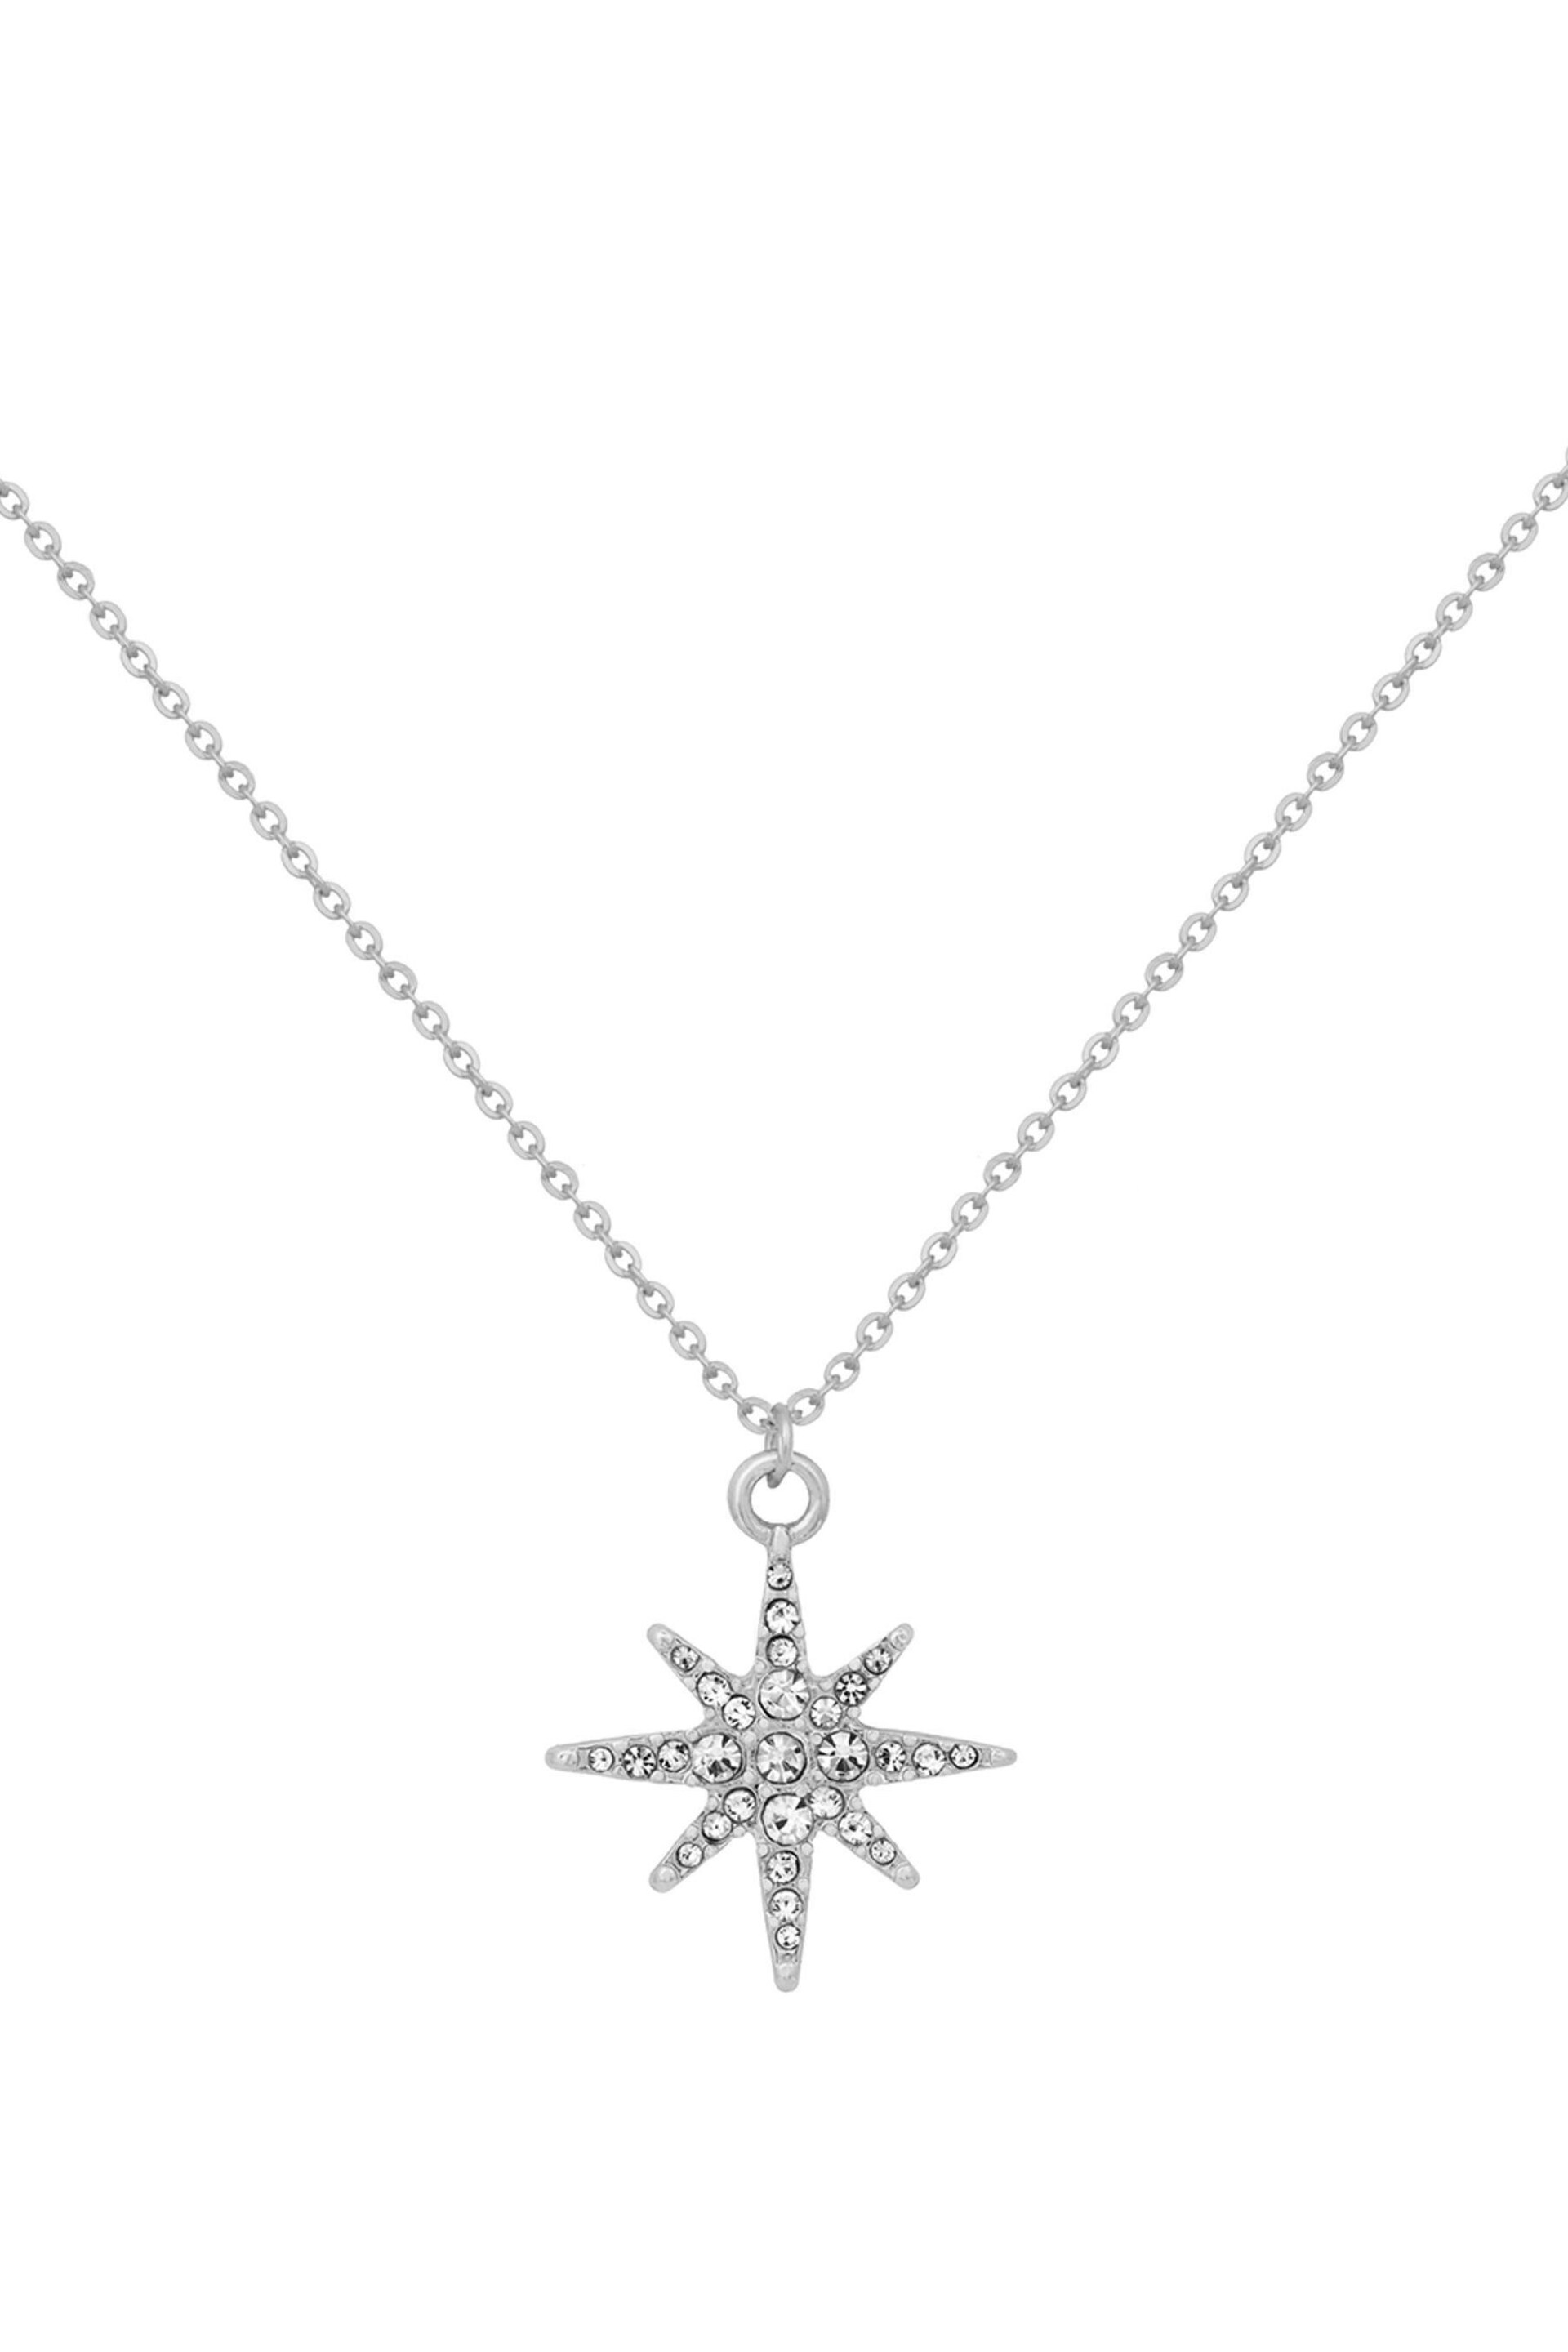 Caramel Jewellery London Silver Superstar Necklace - Image 6 of 8